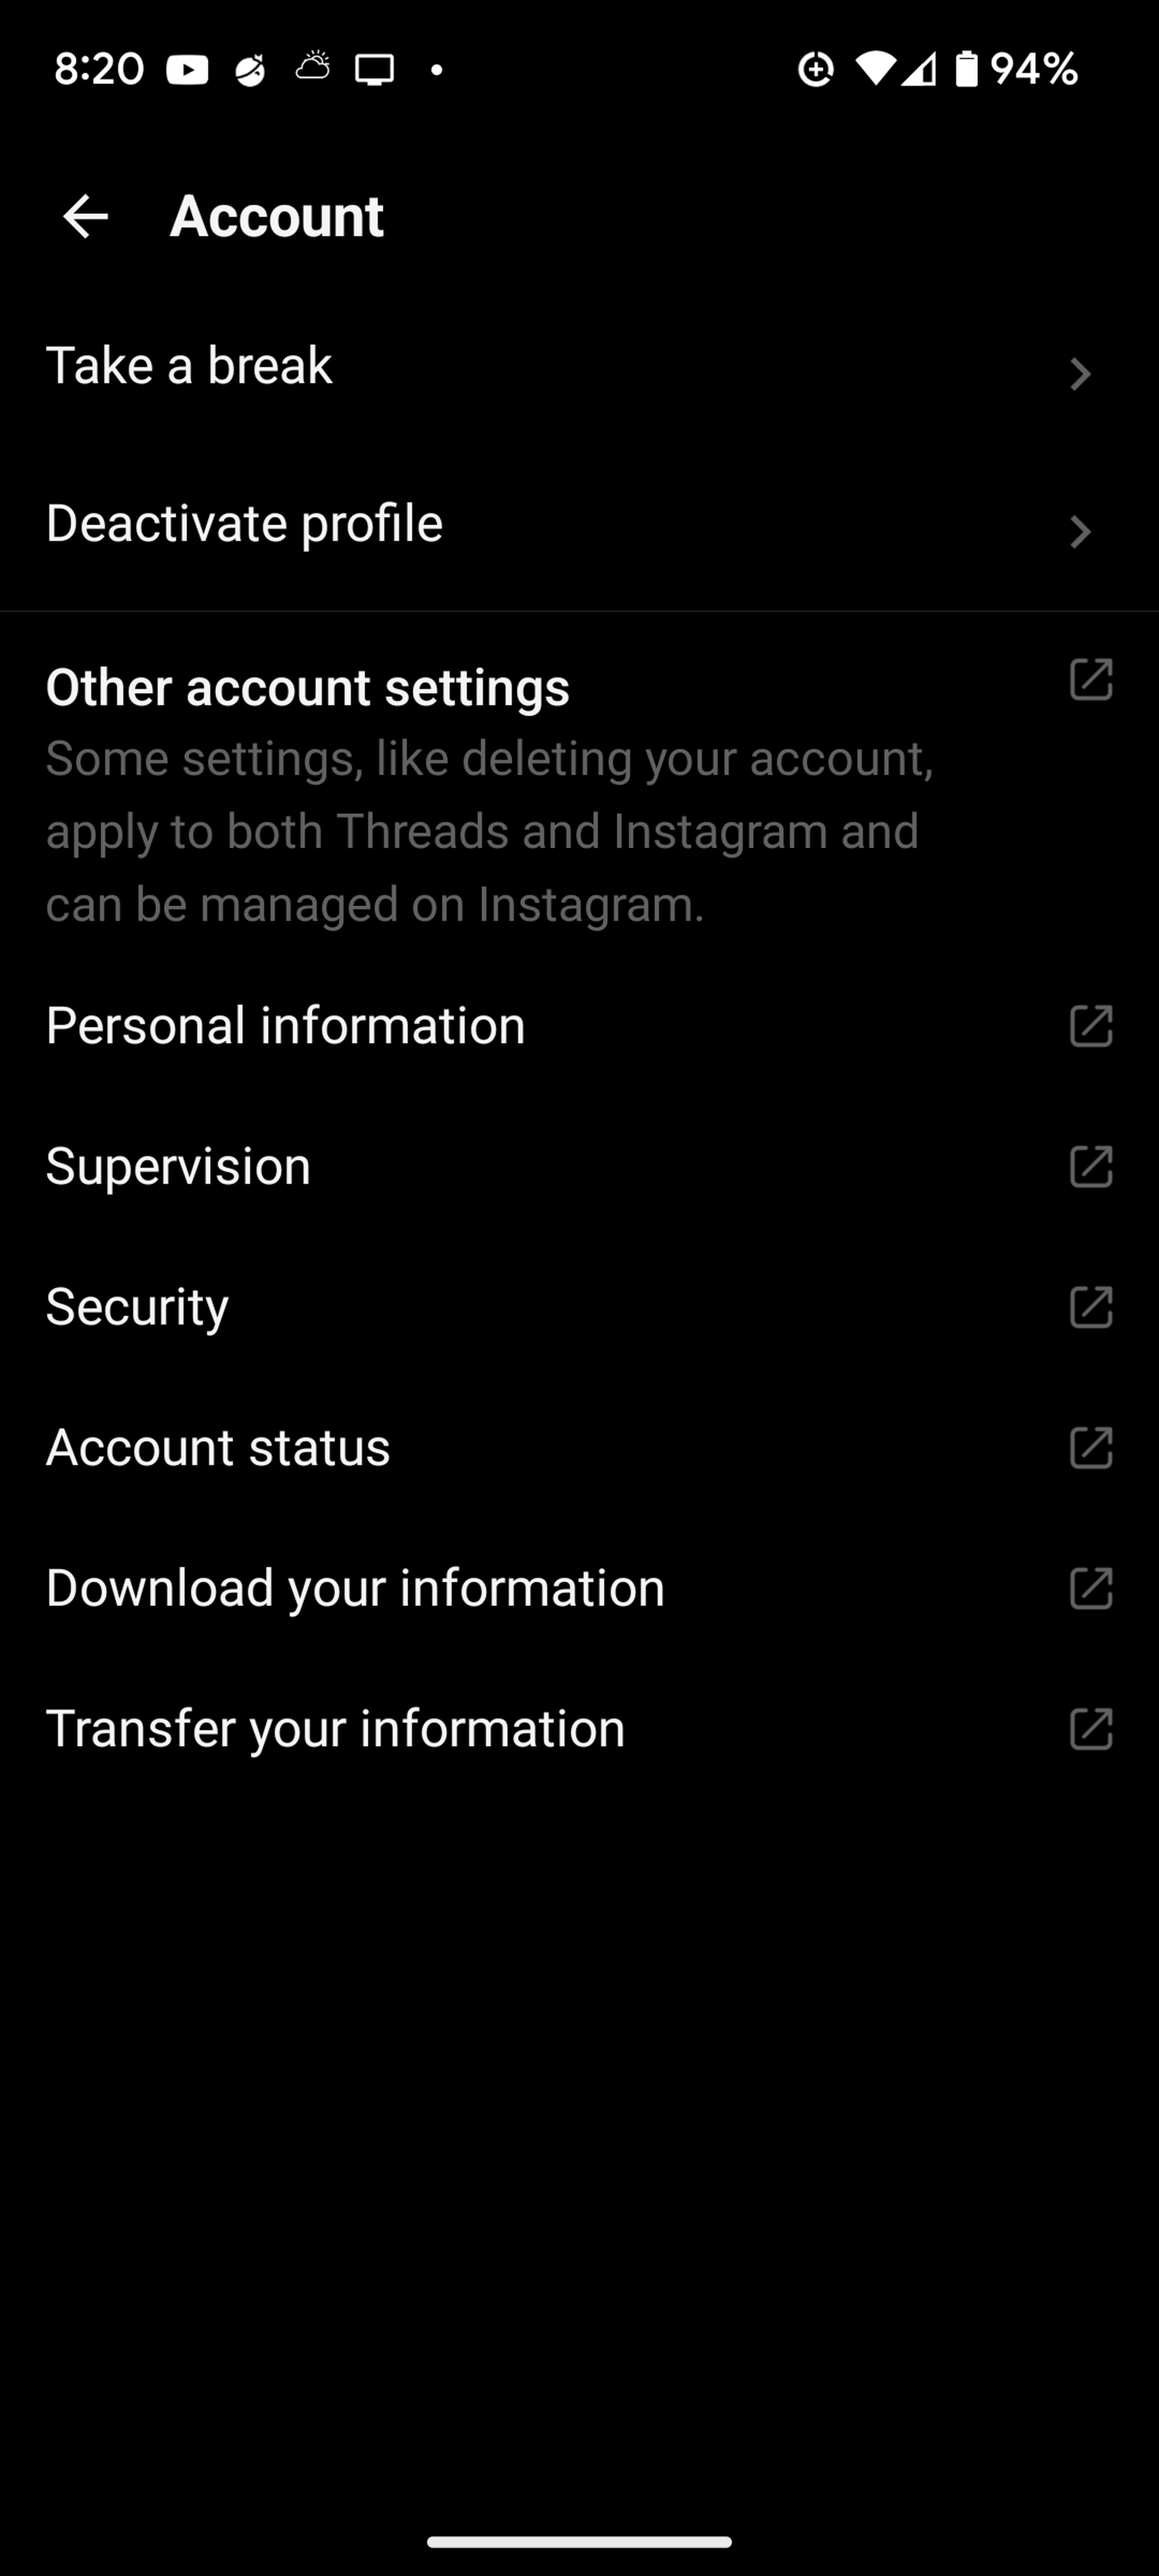 List of account settings